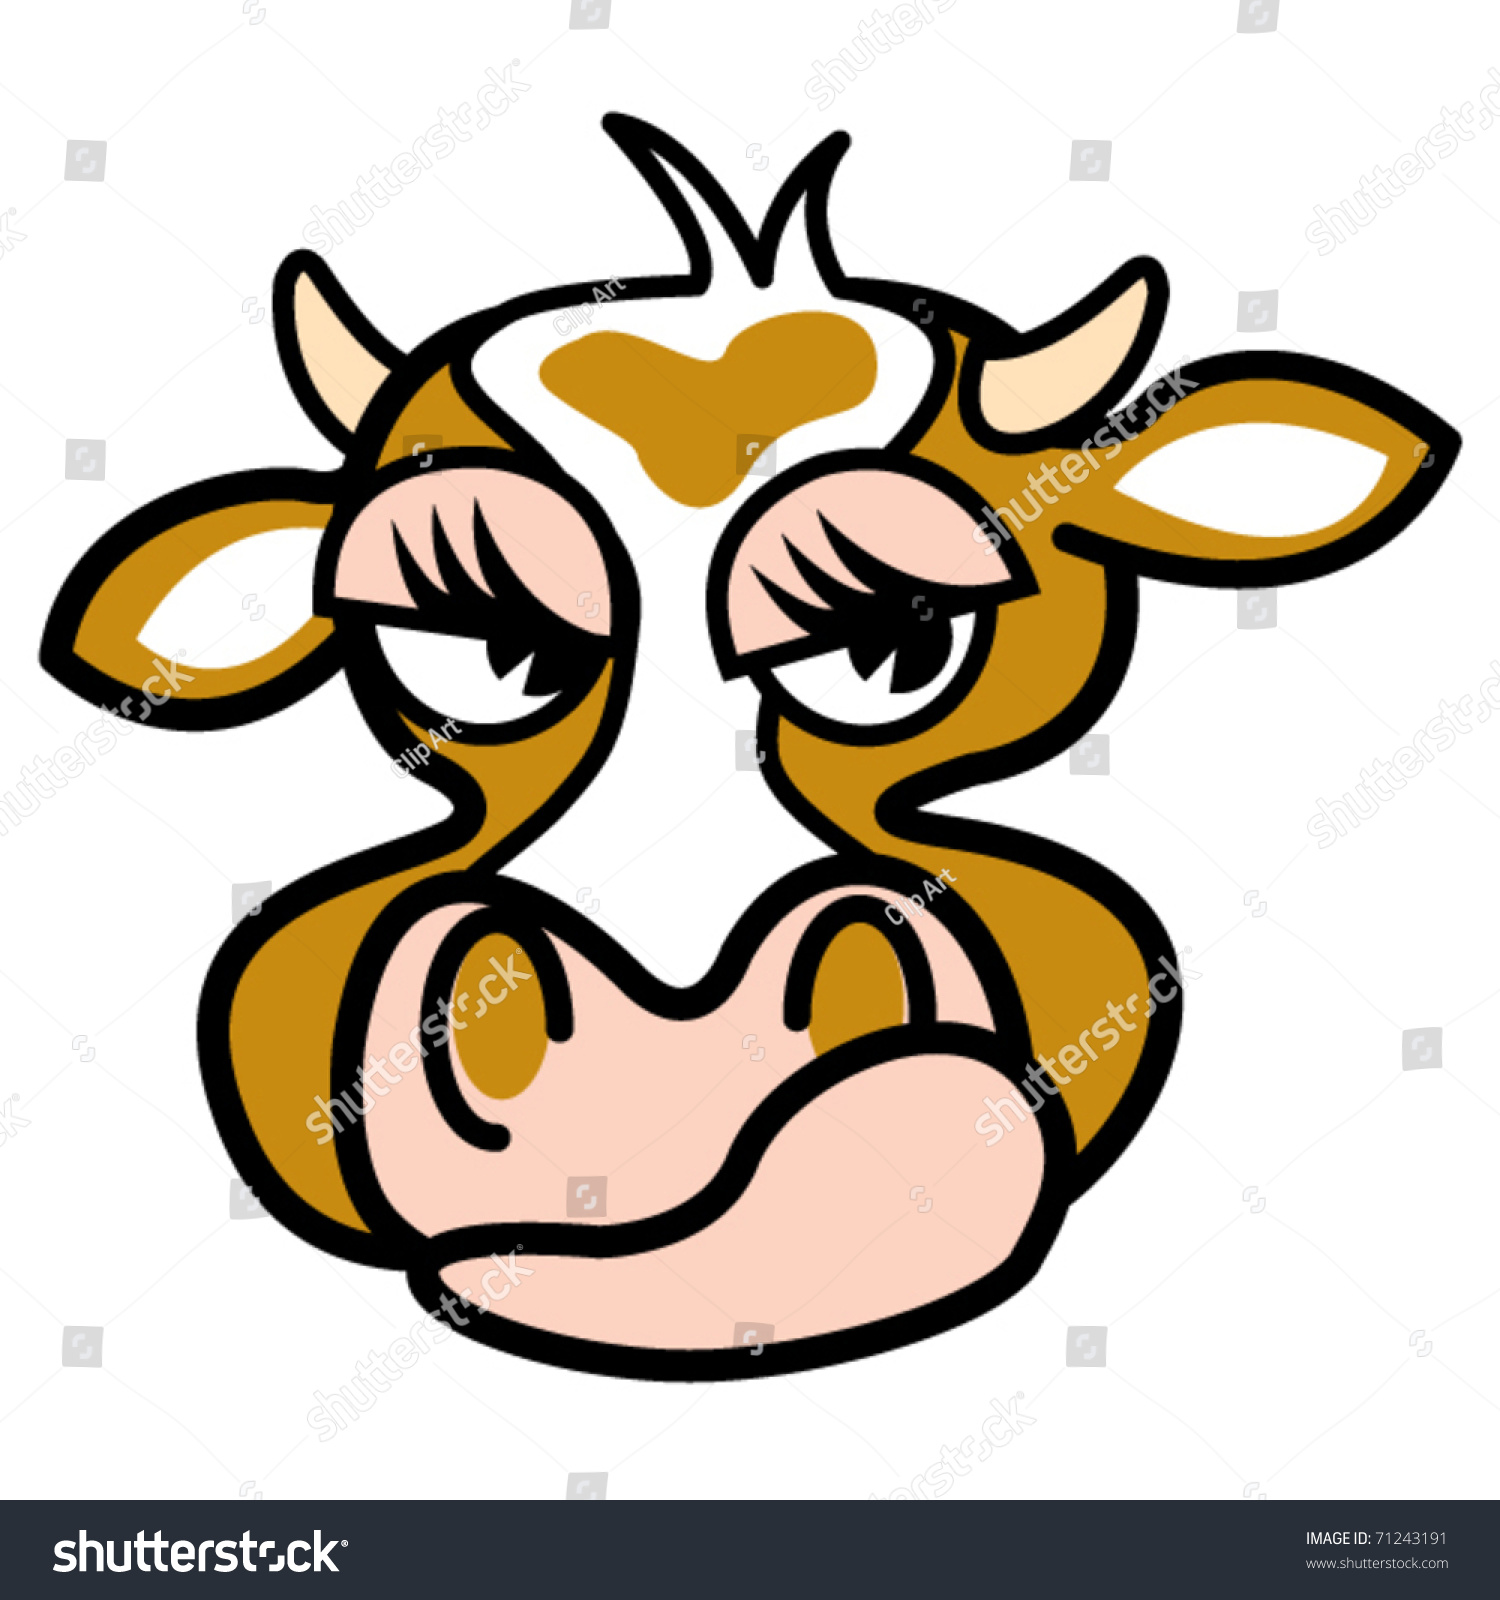 funny cow clip art - photo #47